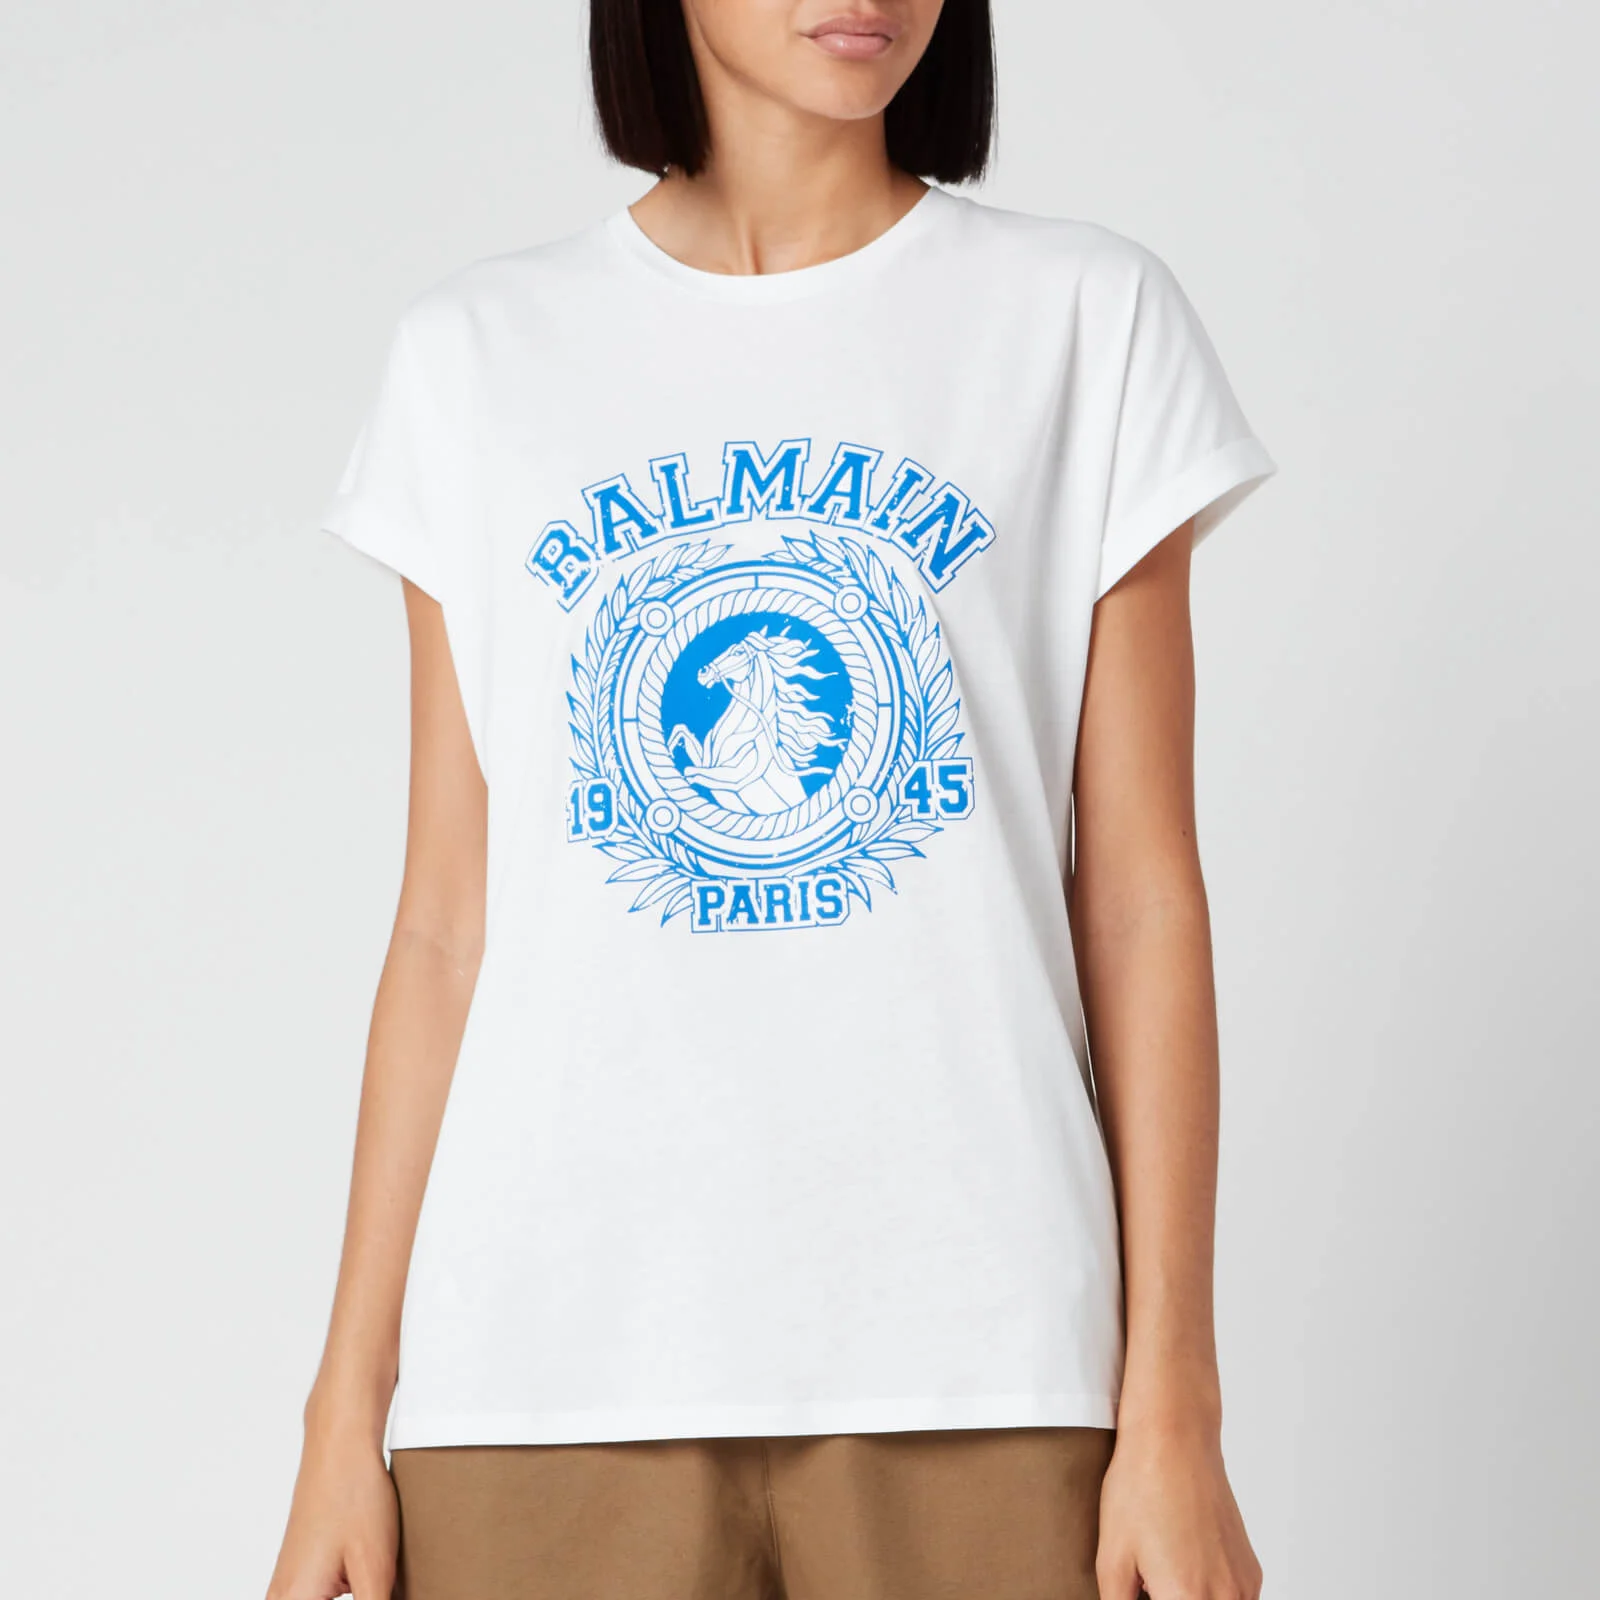 Balmain Women's Flocked Balmain University T-Shirt - White Image 1